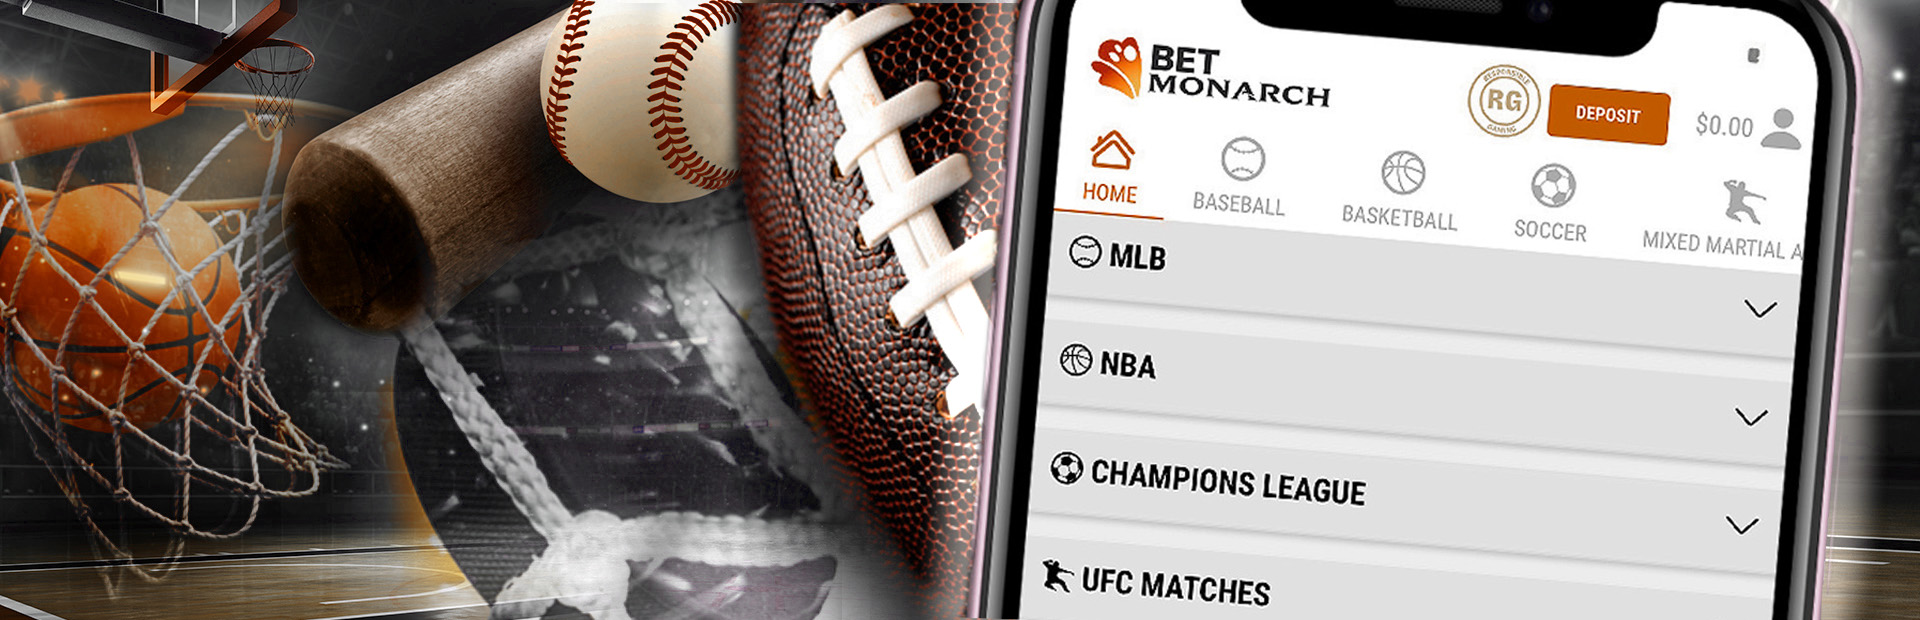 Sportsbook Lounge -  Bet Monarch Sports Betting App